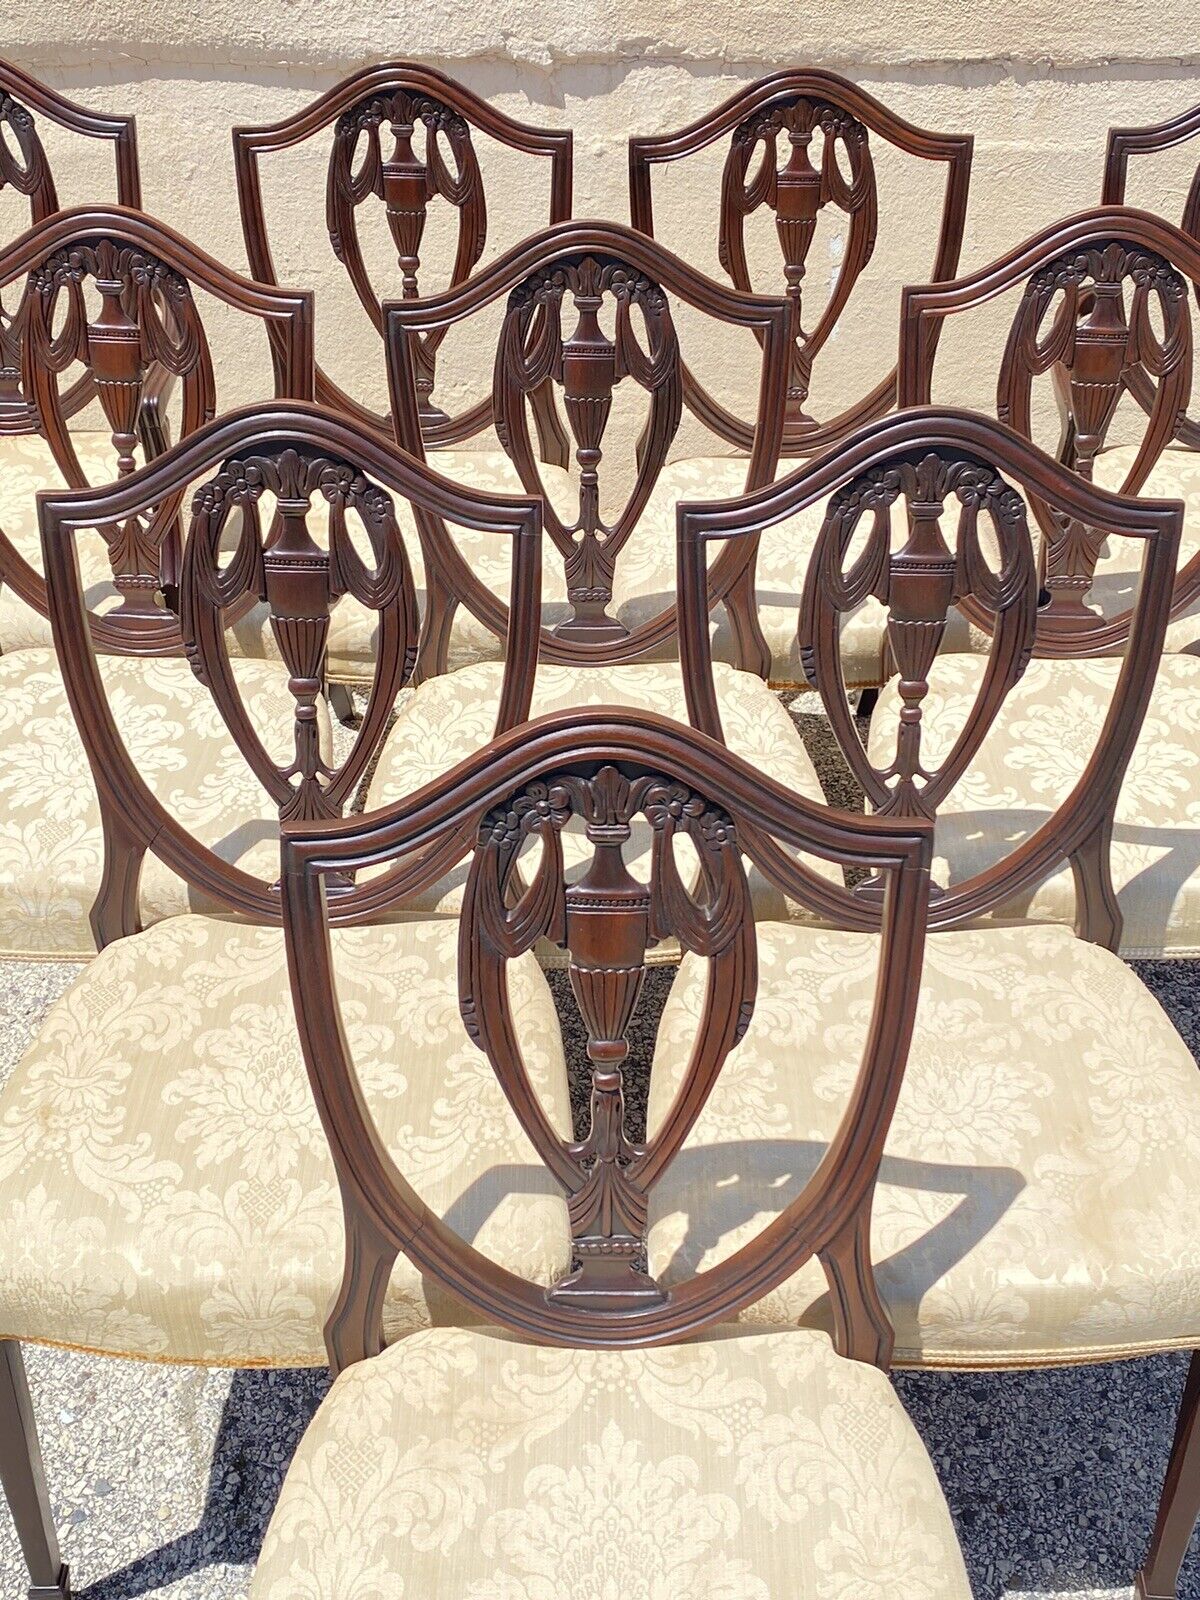 Vtg Mahogany Shield Back Hepplewhite Style Duncan Phyfe Dining Chairs Set of 10